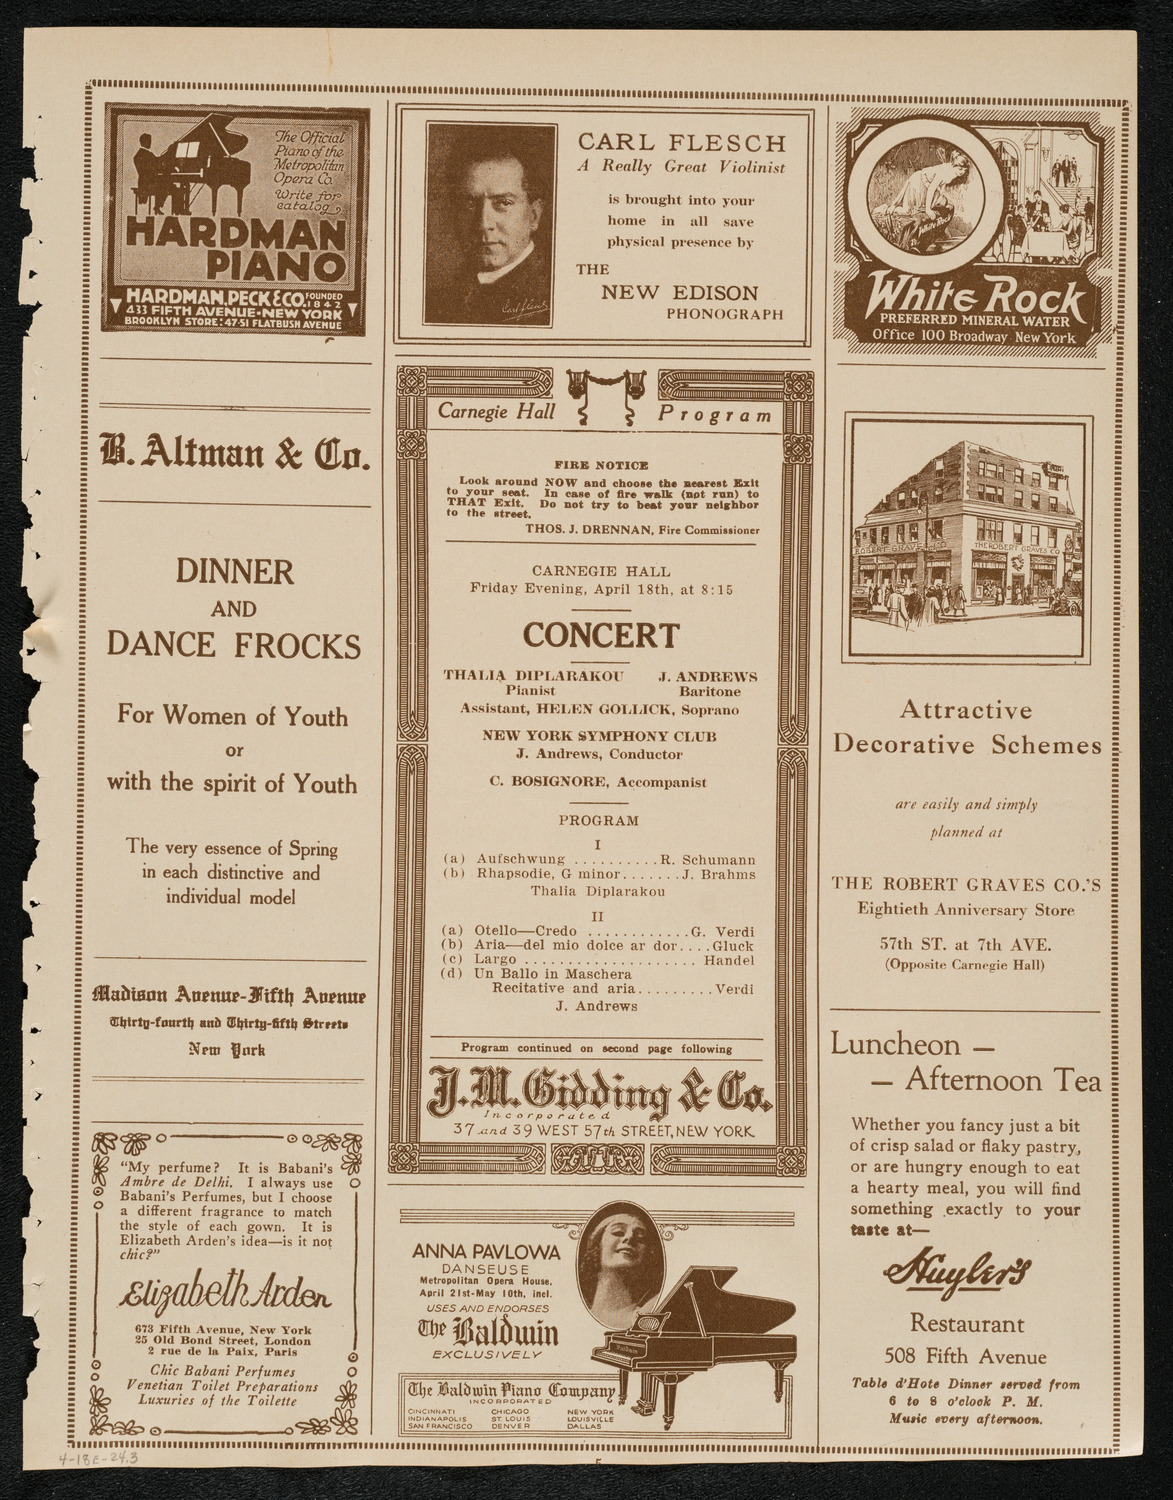 New York Symphony Club, April 18, 1924, program page 5